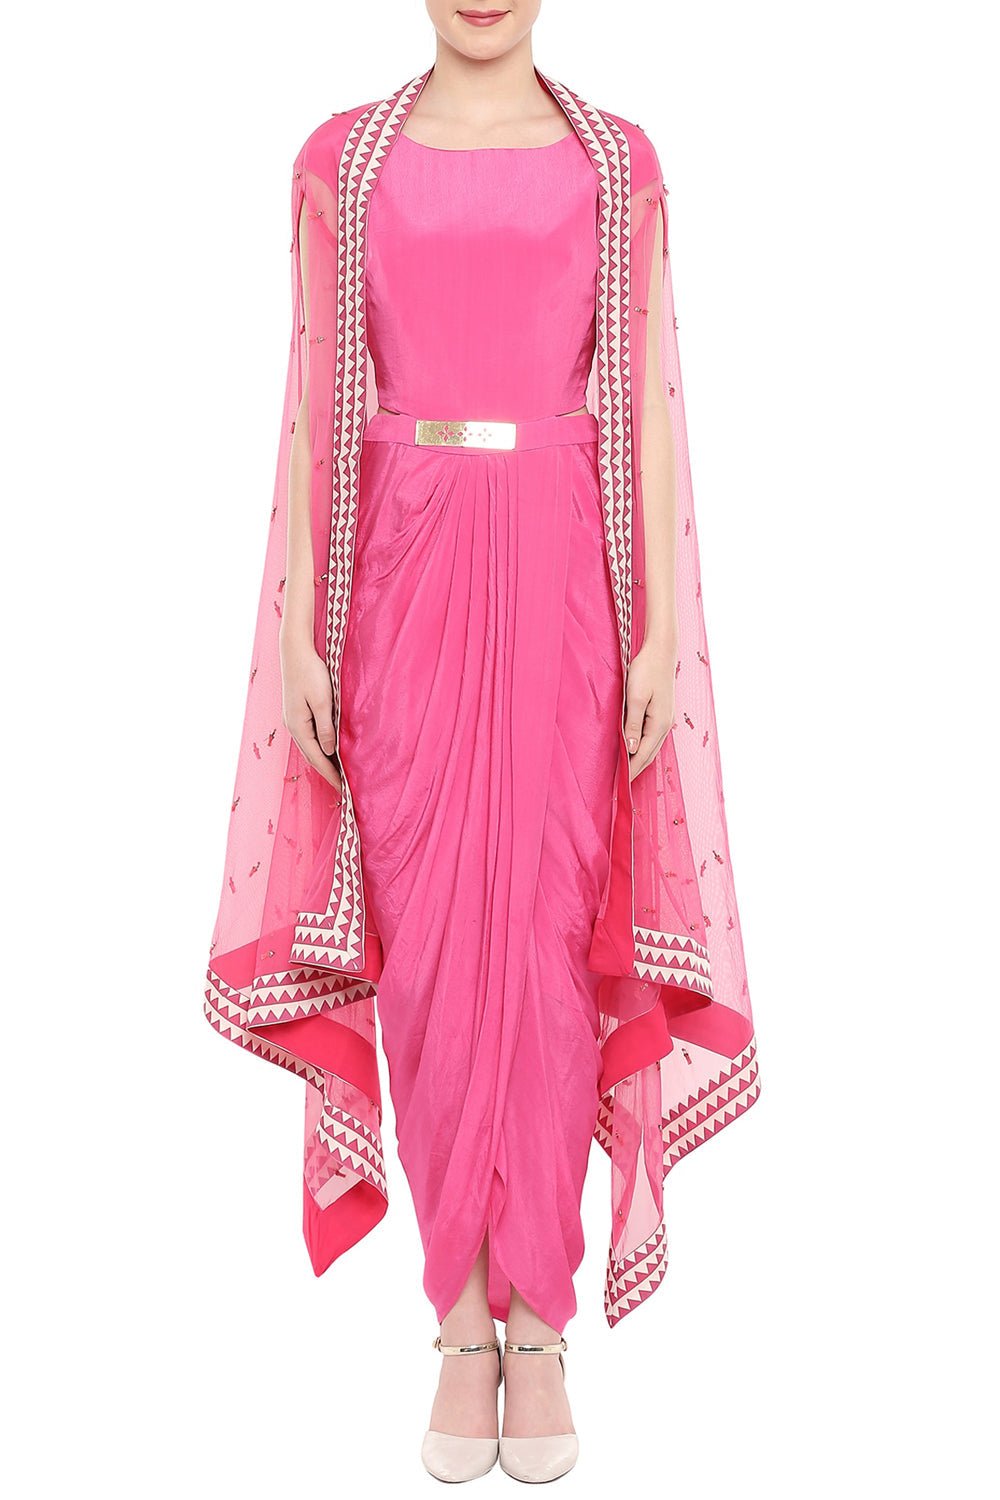 Fuchsia Pink Geometric Printed Drape Dress With Cape